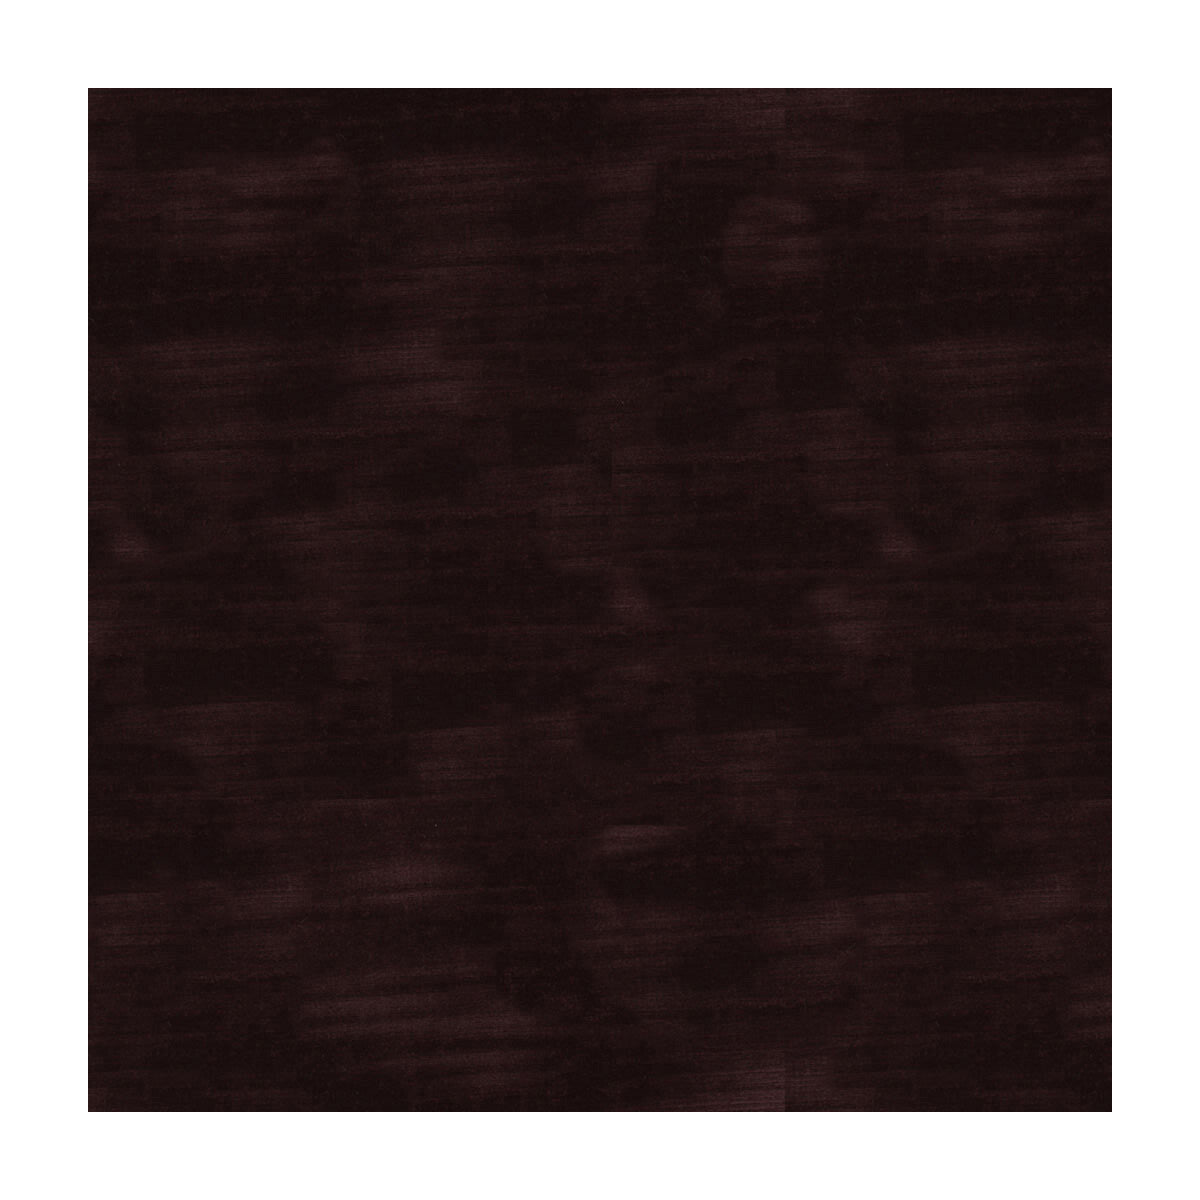 Lazare Velvet fabric in eggplant color - pattern 8016103.1010.0 - by Brunschwig &amp; Fils